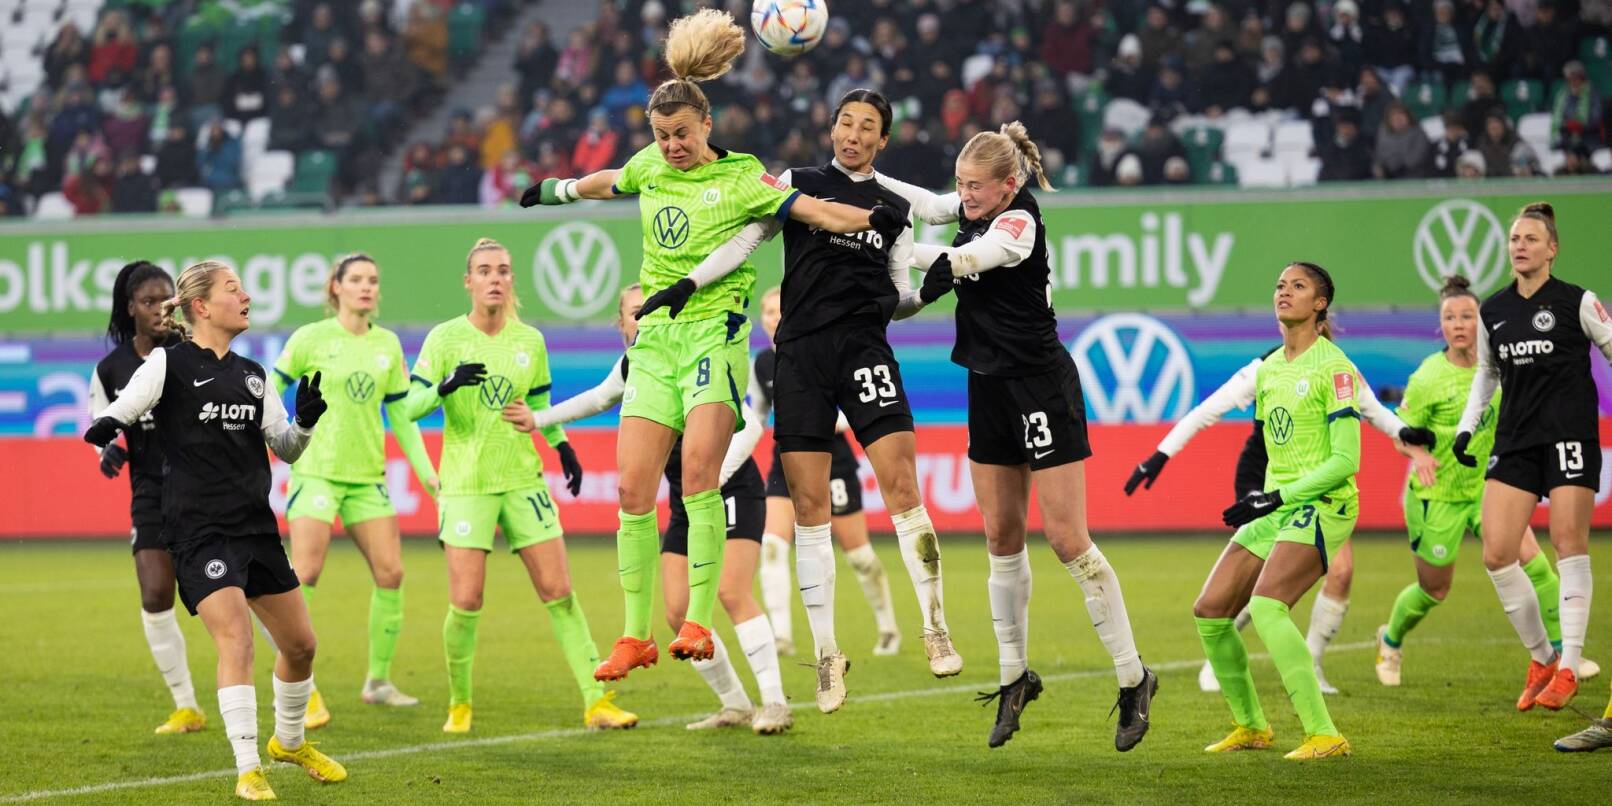 Wolfsburgs Lena Lattwein (5.v.l) köpft den Ball nach einer Ecke im Frankfurter Strafraum gegen Frankfurts Sara Doorsoun (6.v.l) und Frankfurts Camilla Küver (7.v.l).